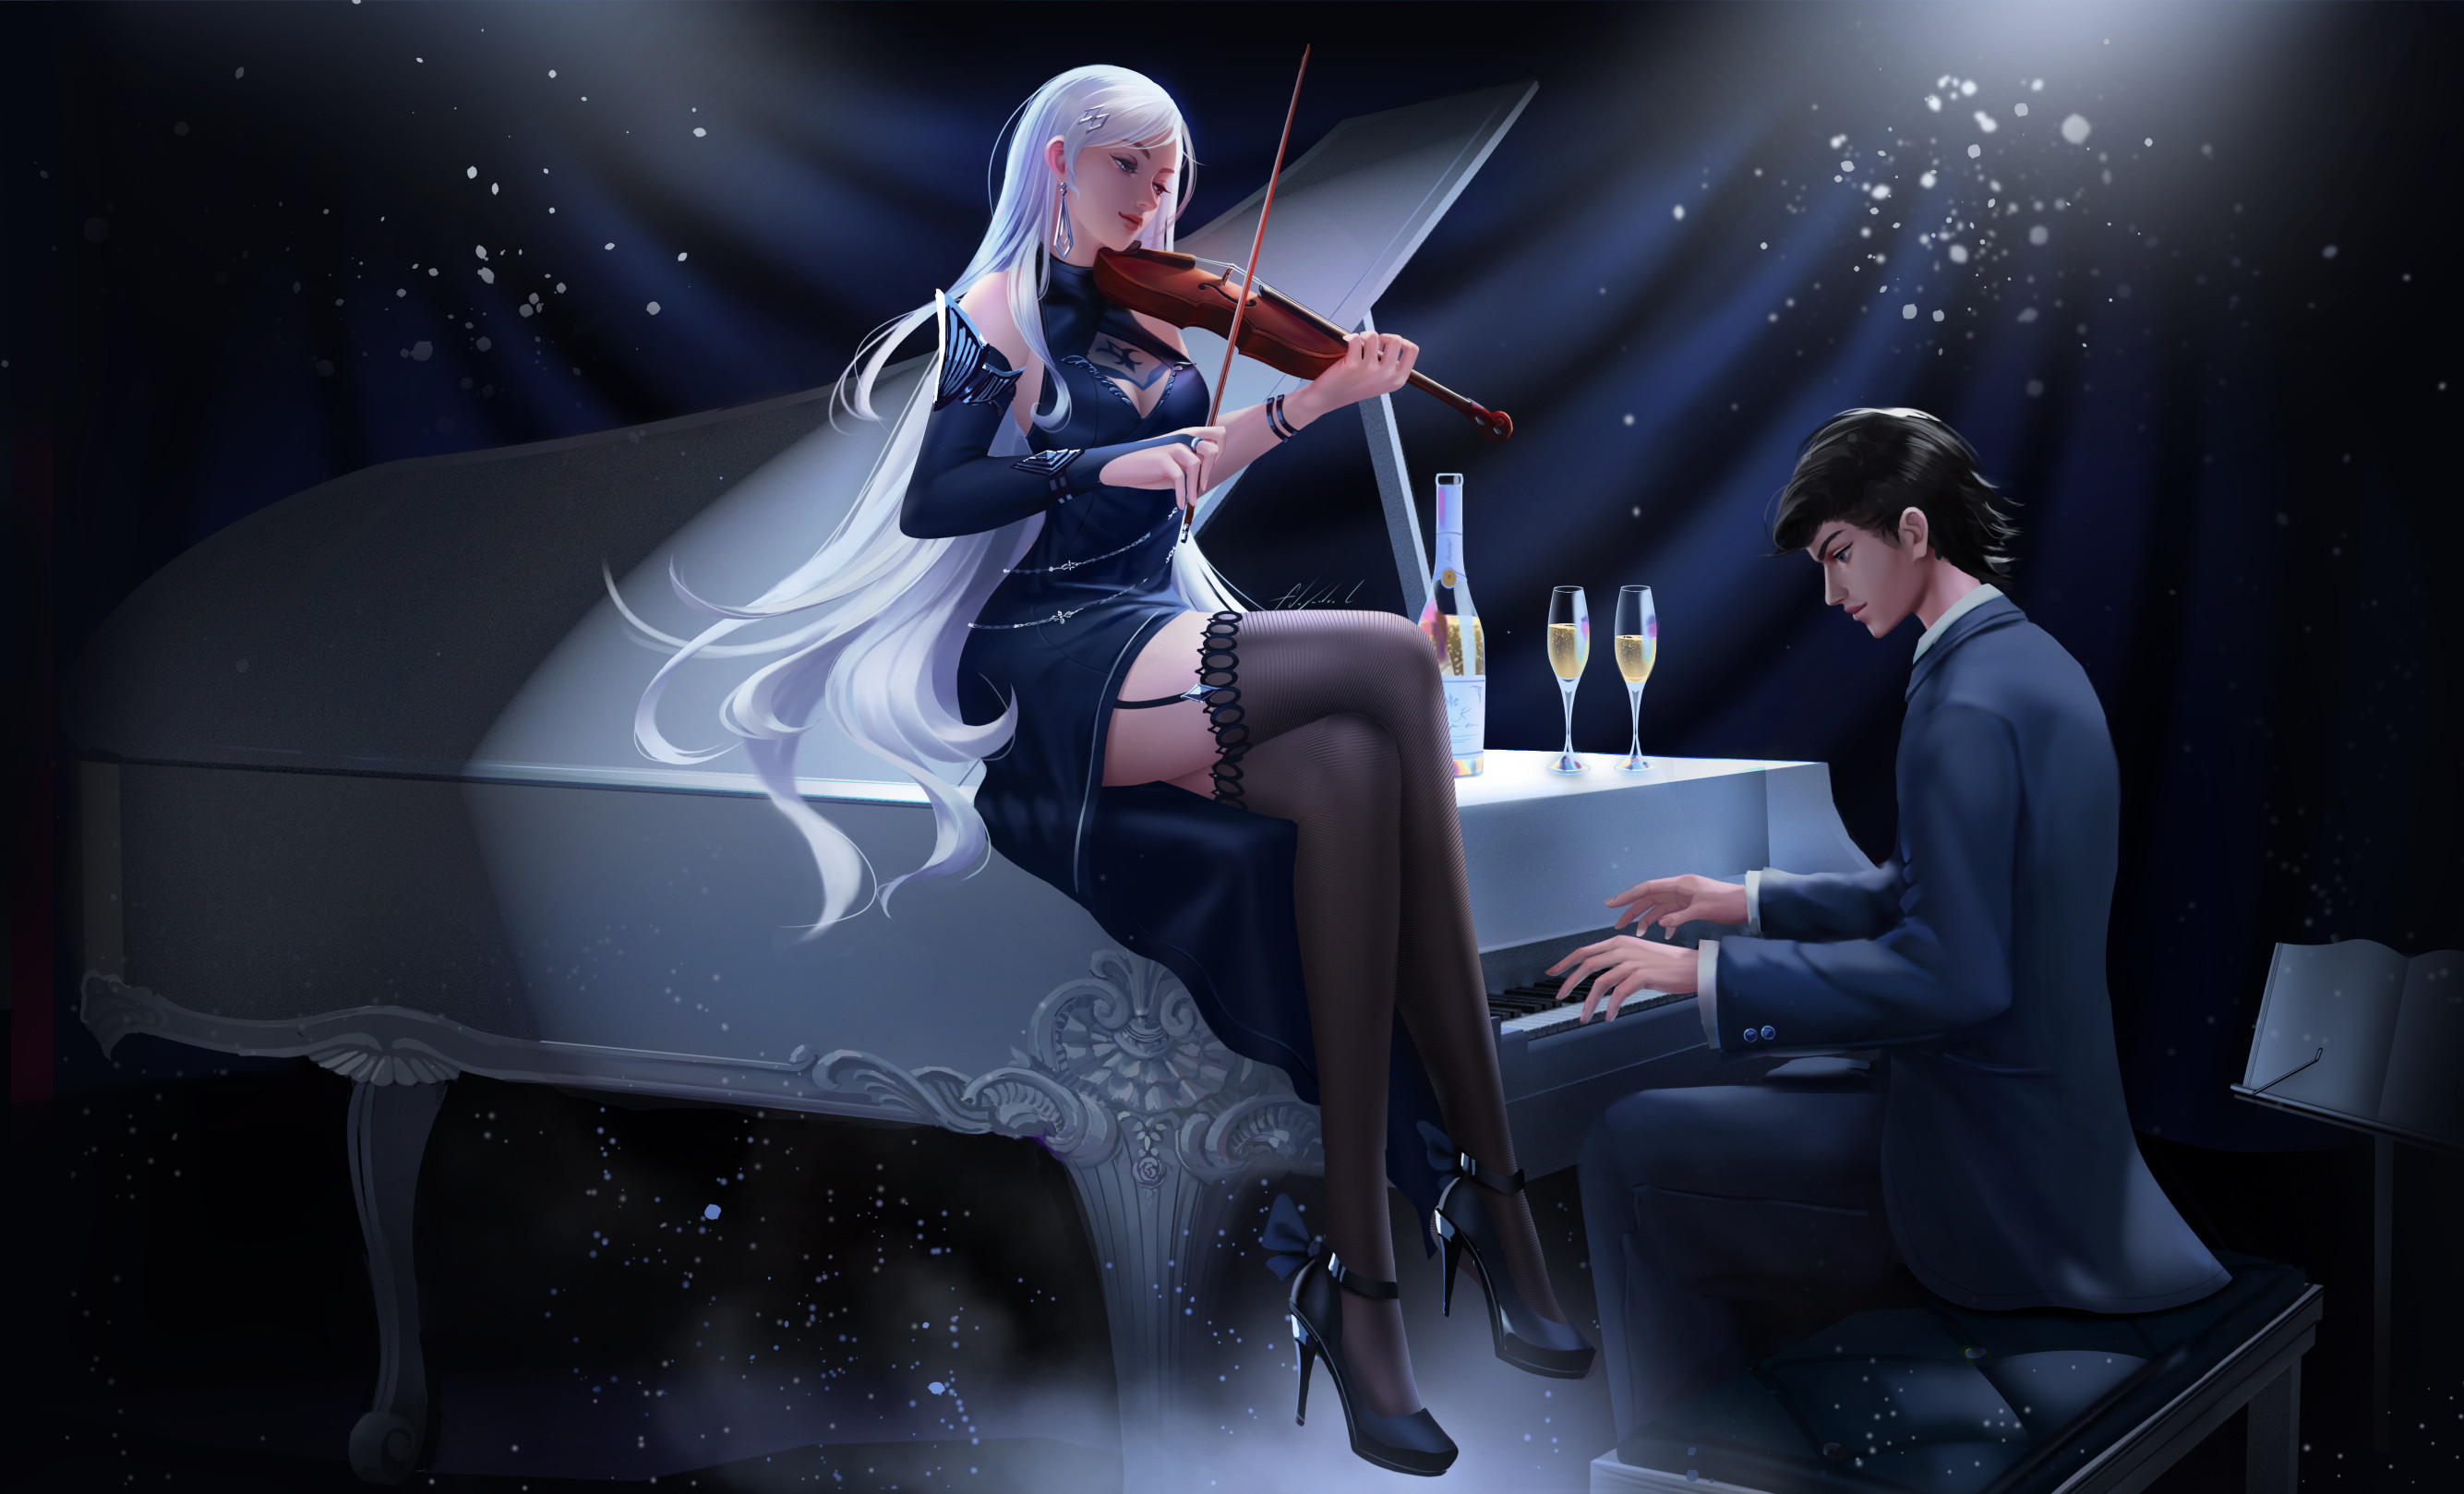 General 2669x1618 Alejandro Lara drawing women men piano playing violin champagne silver hair legs crossed dress suits